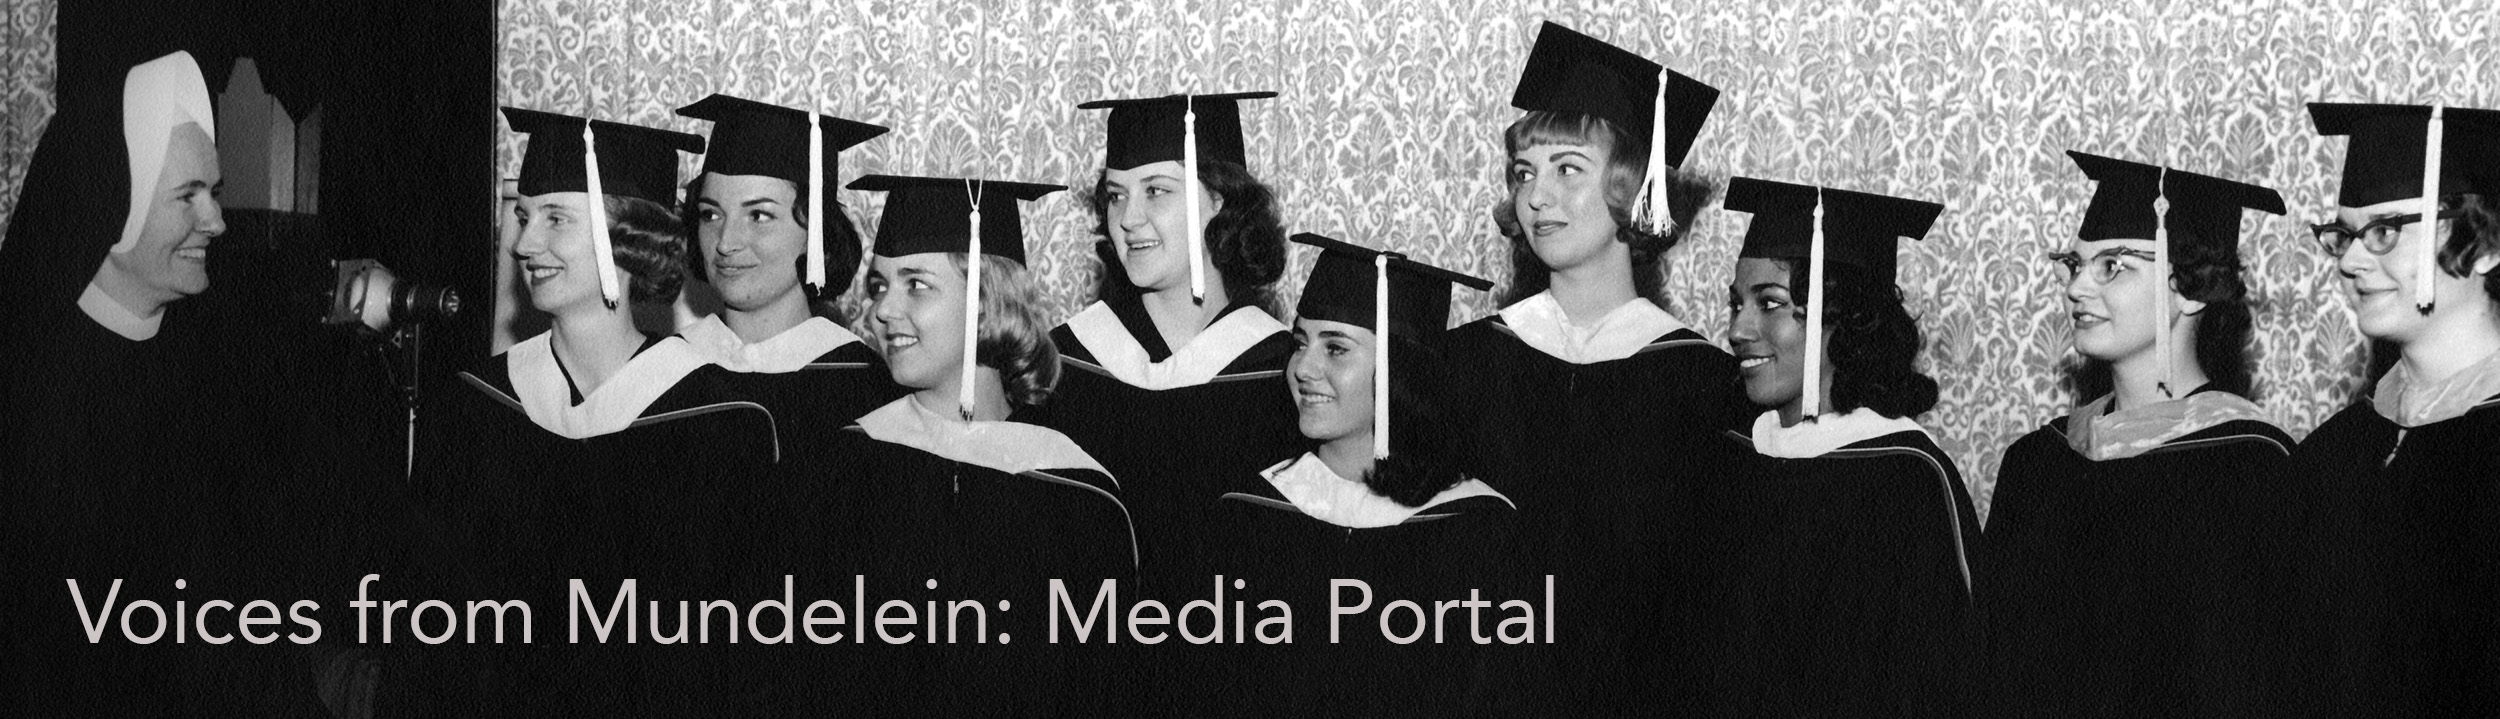 Voices from Mundelein: Media Portal